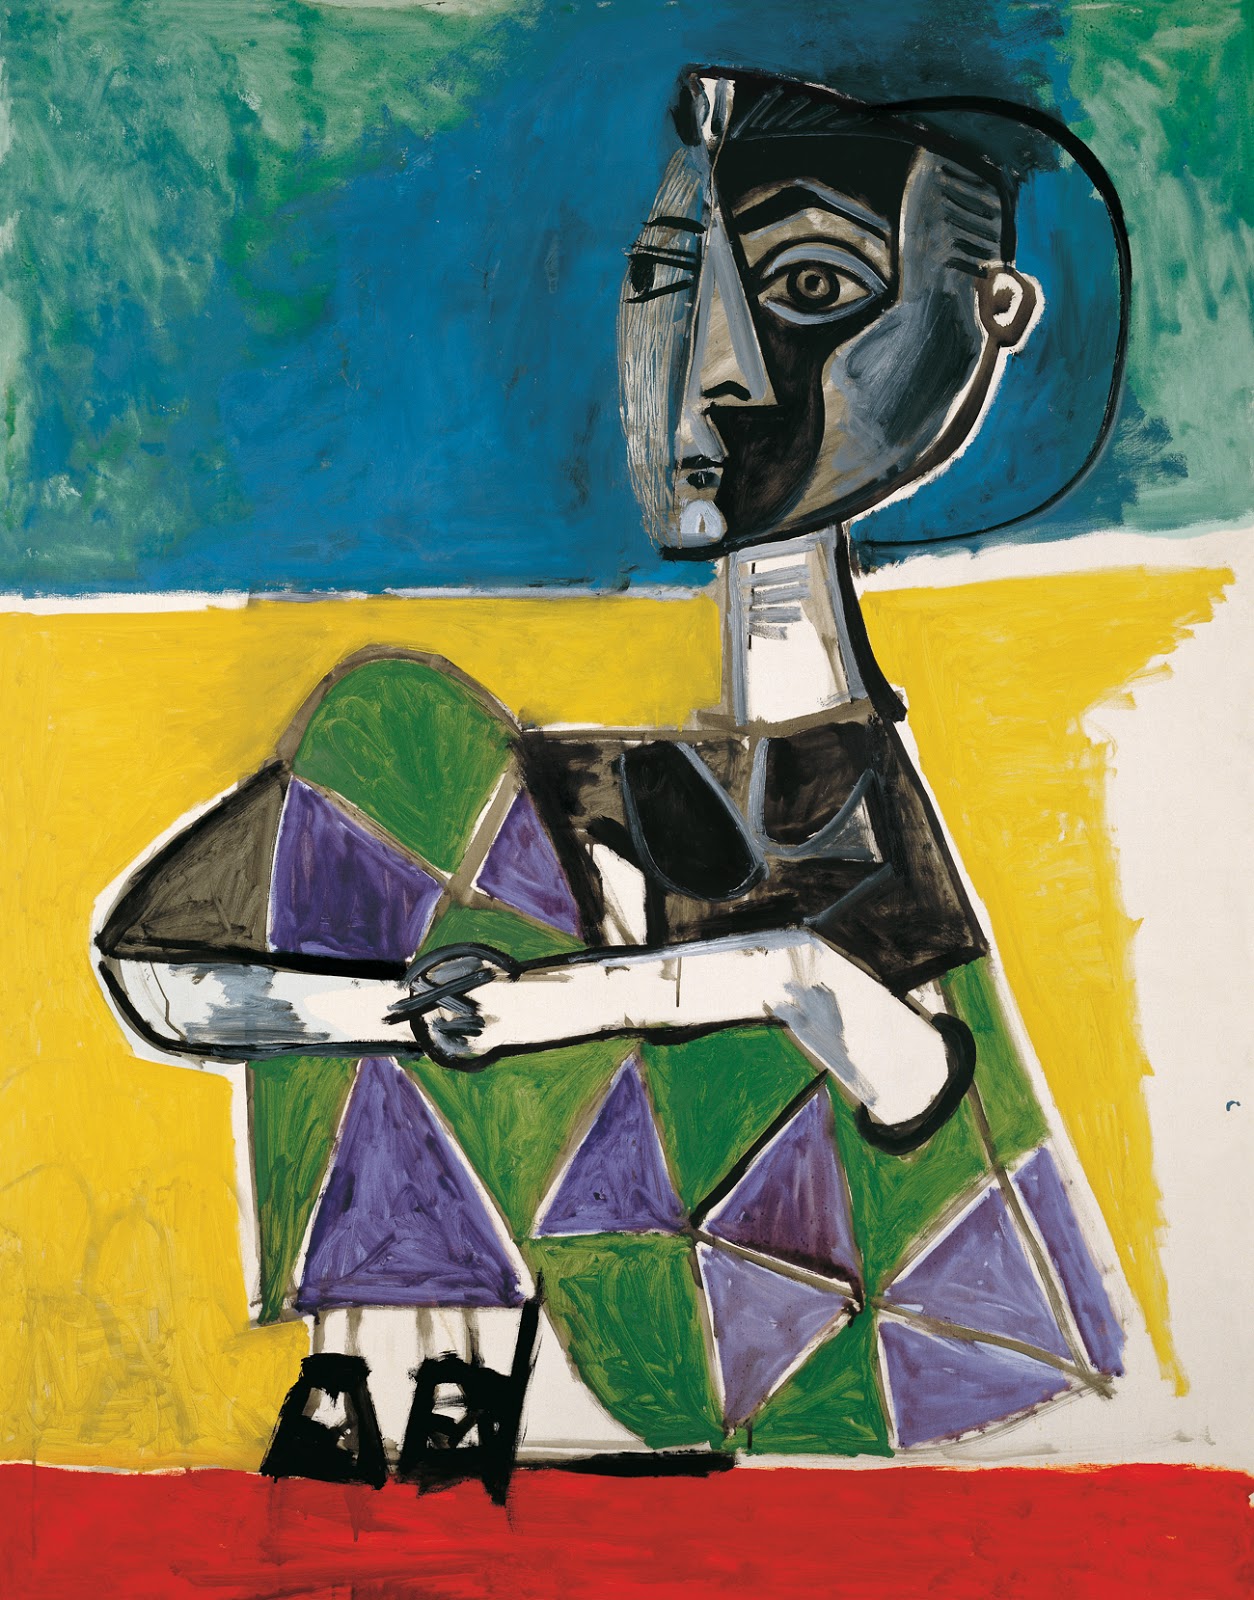 Pablo Picasso, Jacqueline sentada (1954; olio su tela, 146 x 114; Malaga, Museo Picasso)
